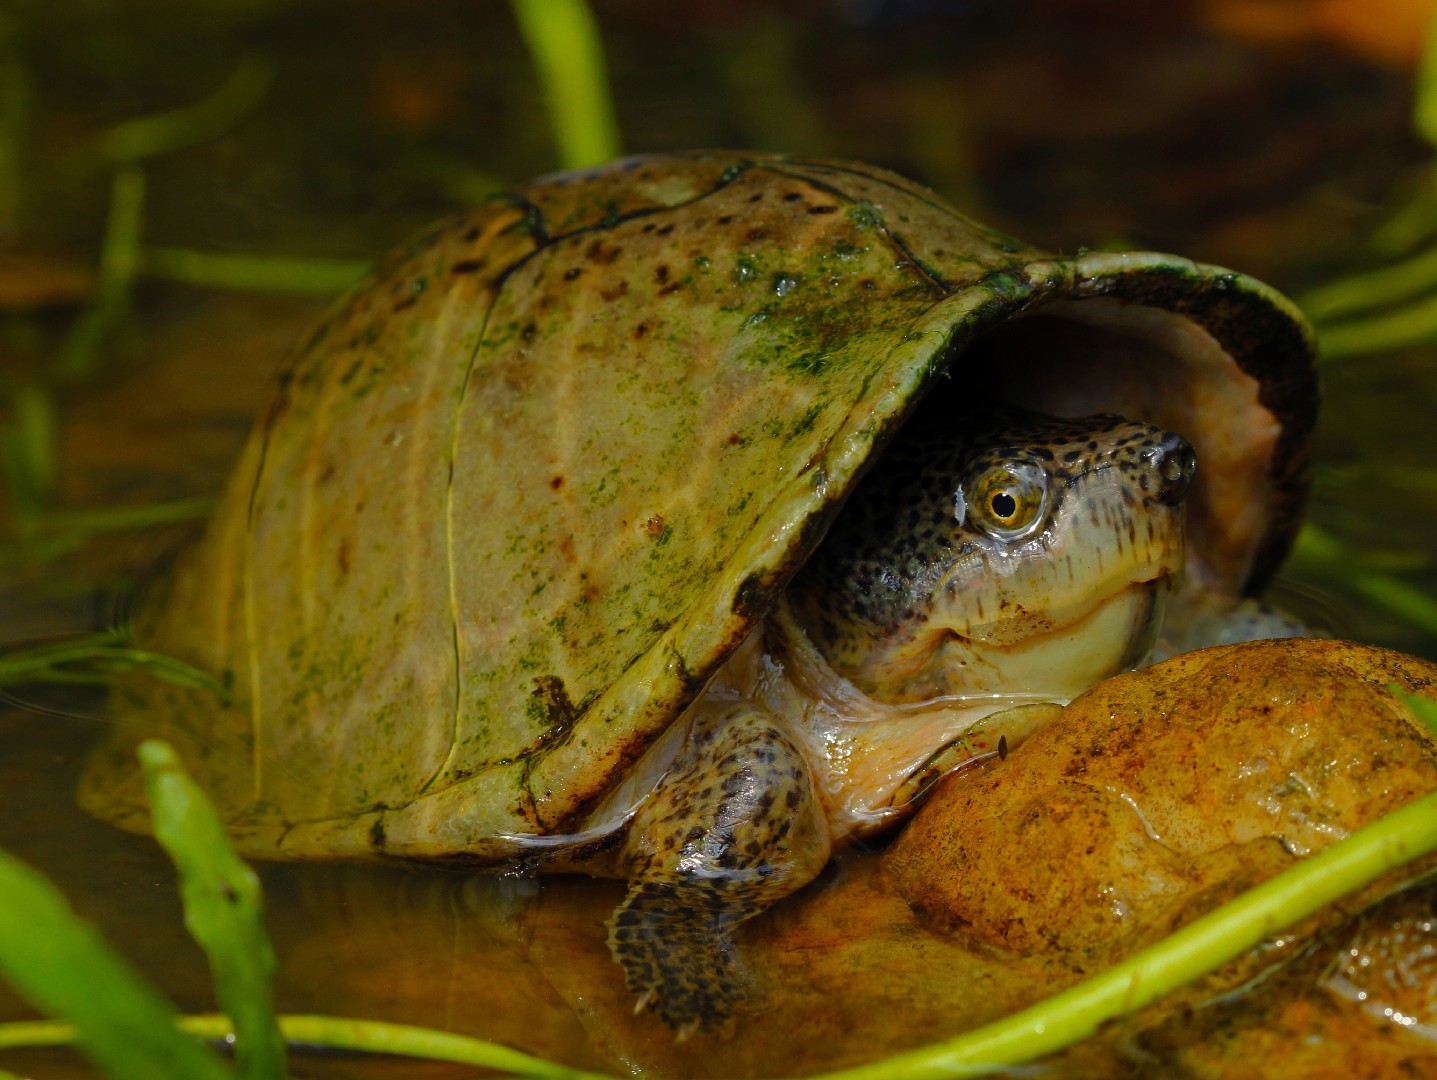 Razor-backed musk turtle (Sternotherus carinatus)